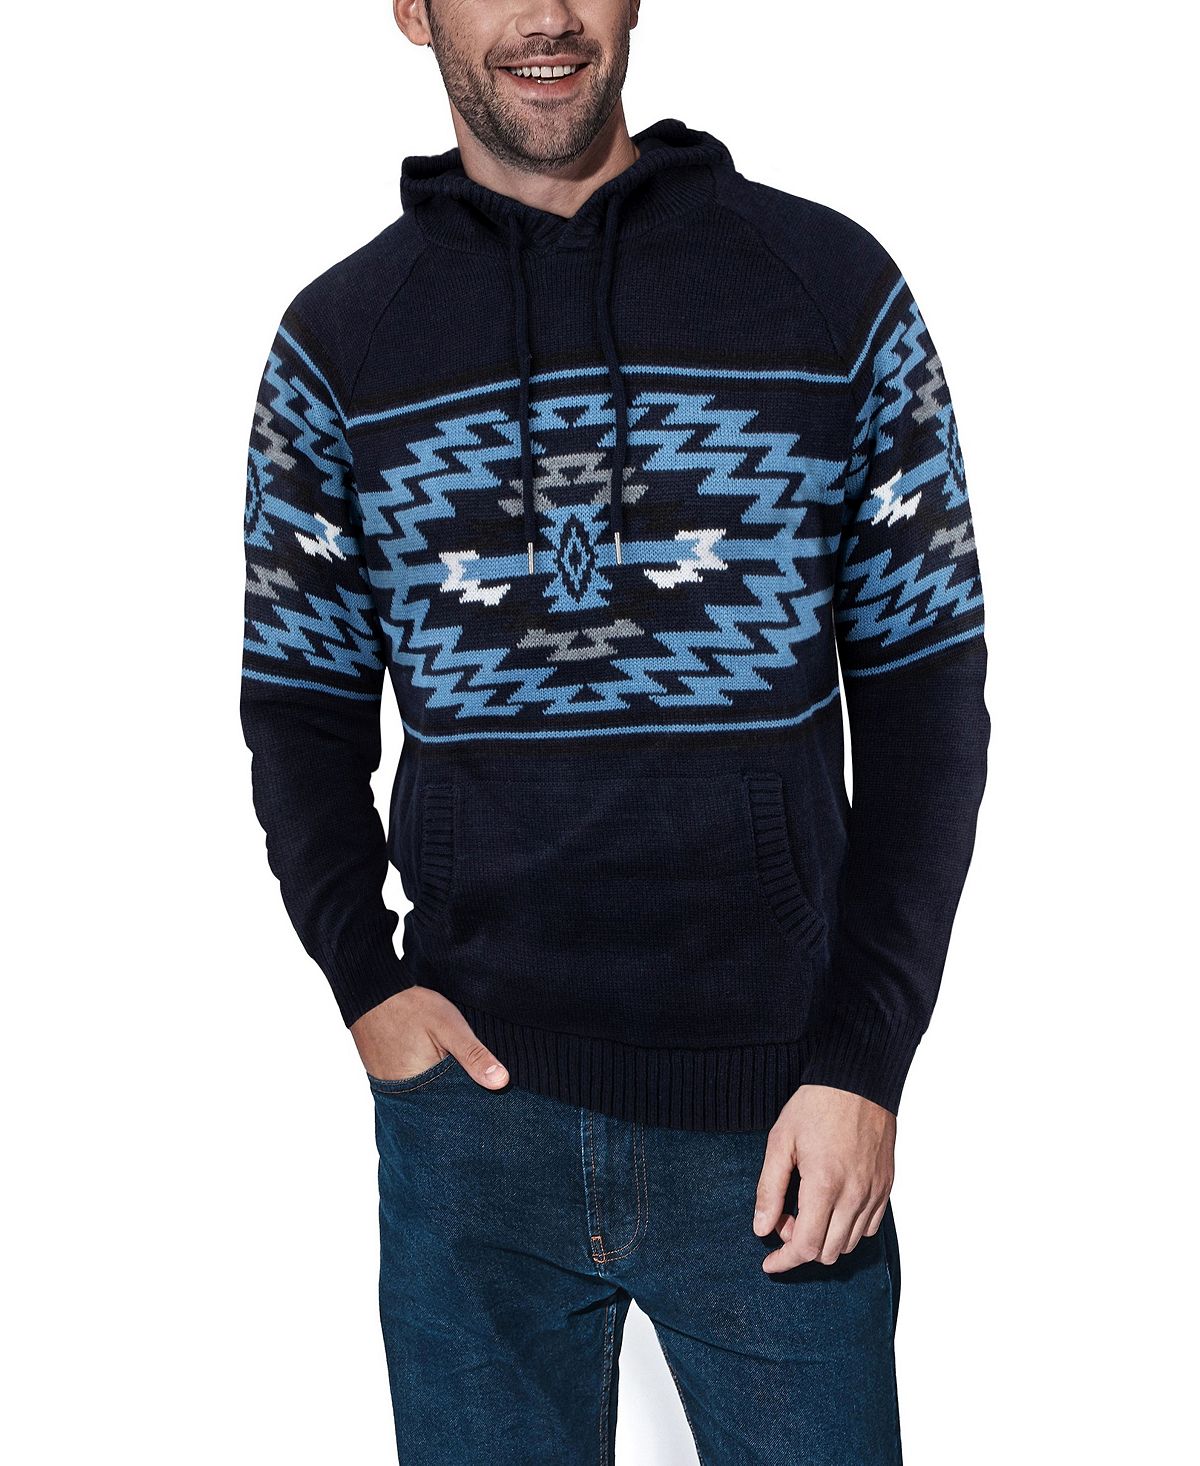 Мужской свитер с капюшоном aztec X-Ray, темно-синий женский свитер с капюшоном и длинными рукавами осень зима